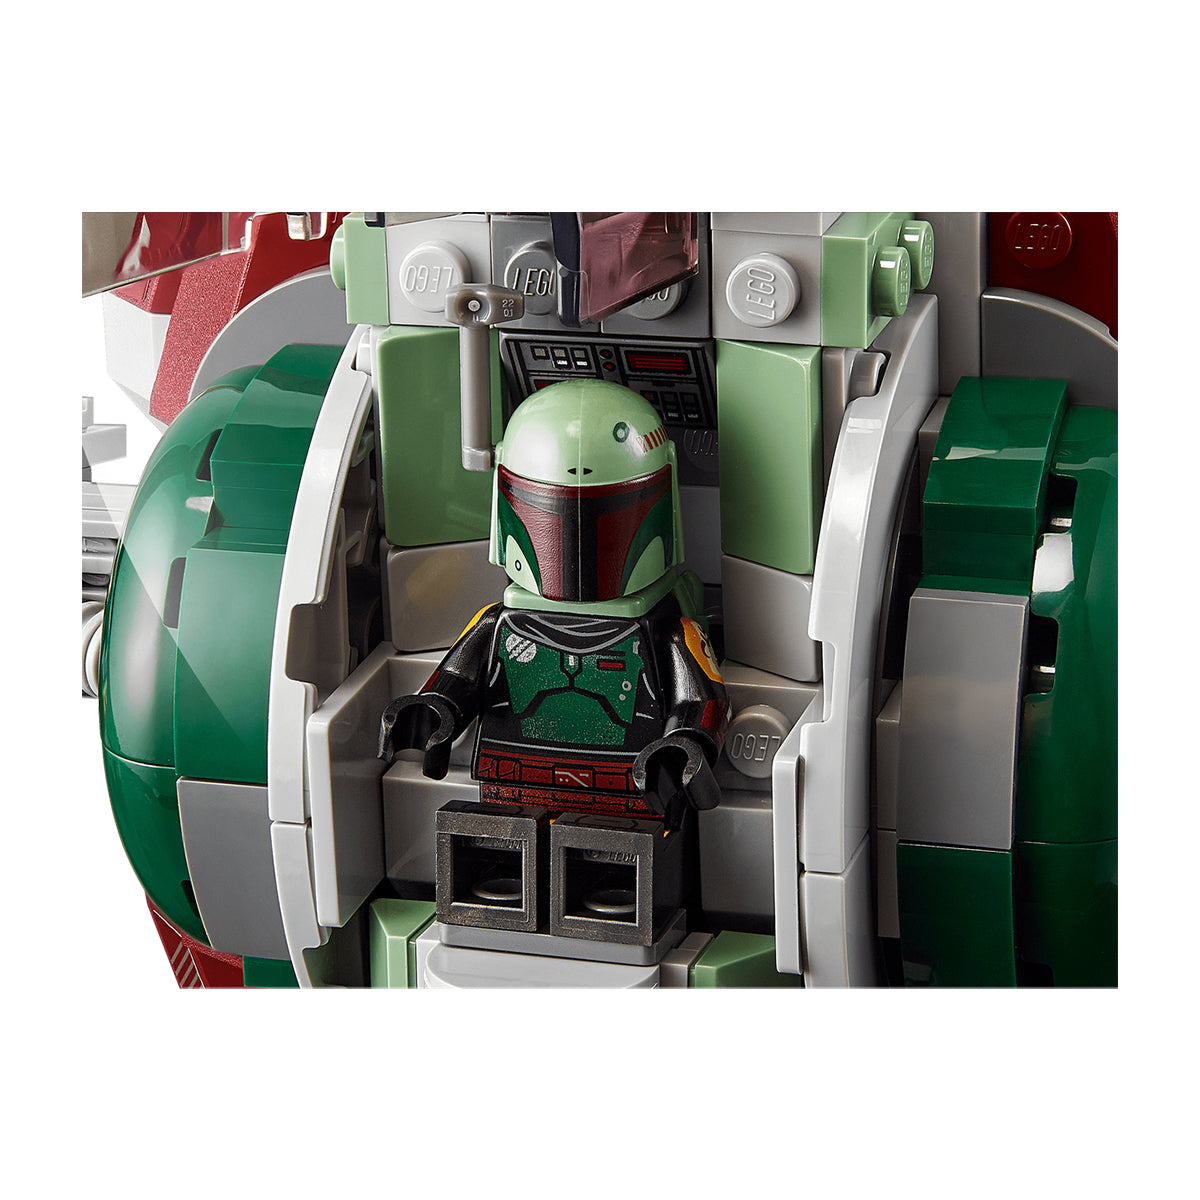 LEGO Star Wars - Boba Fett's Starship 75312